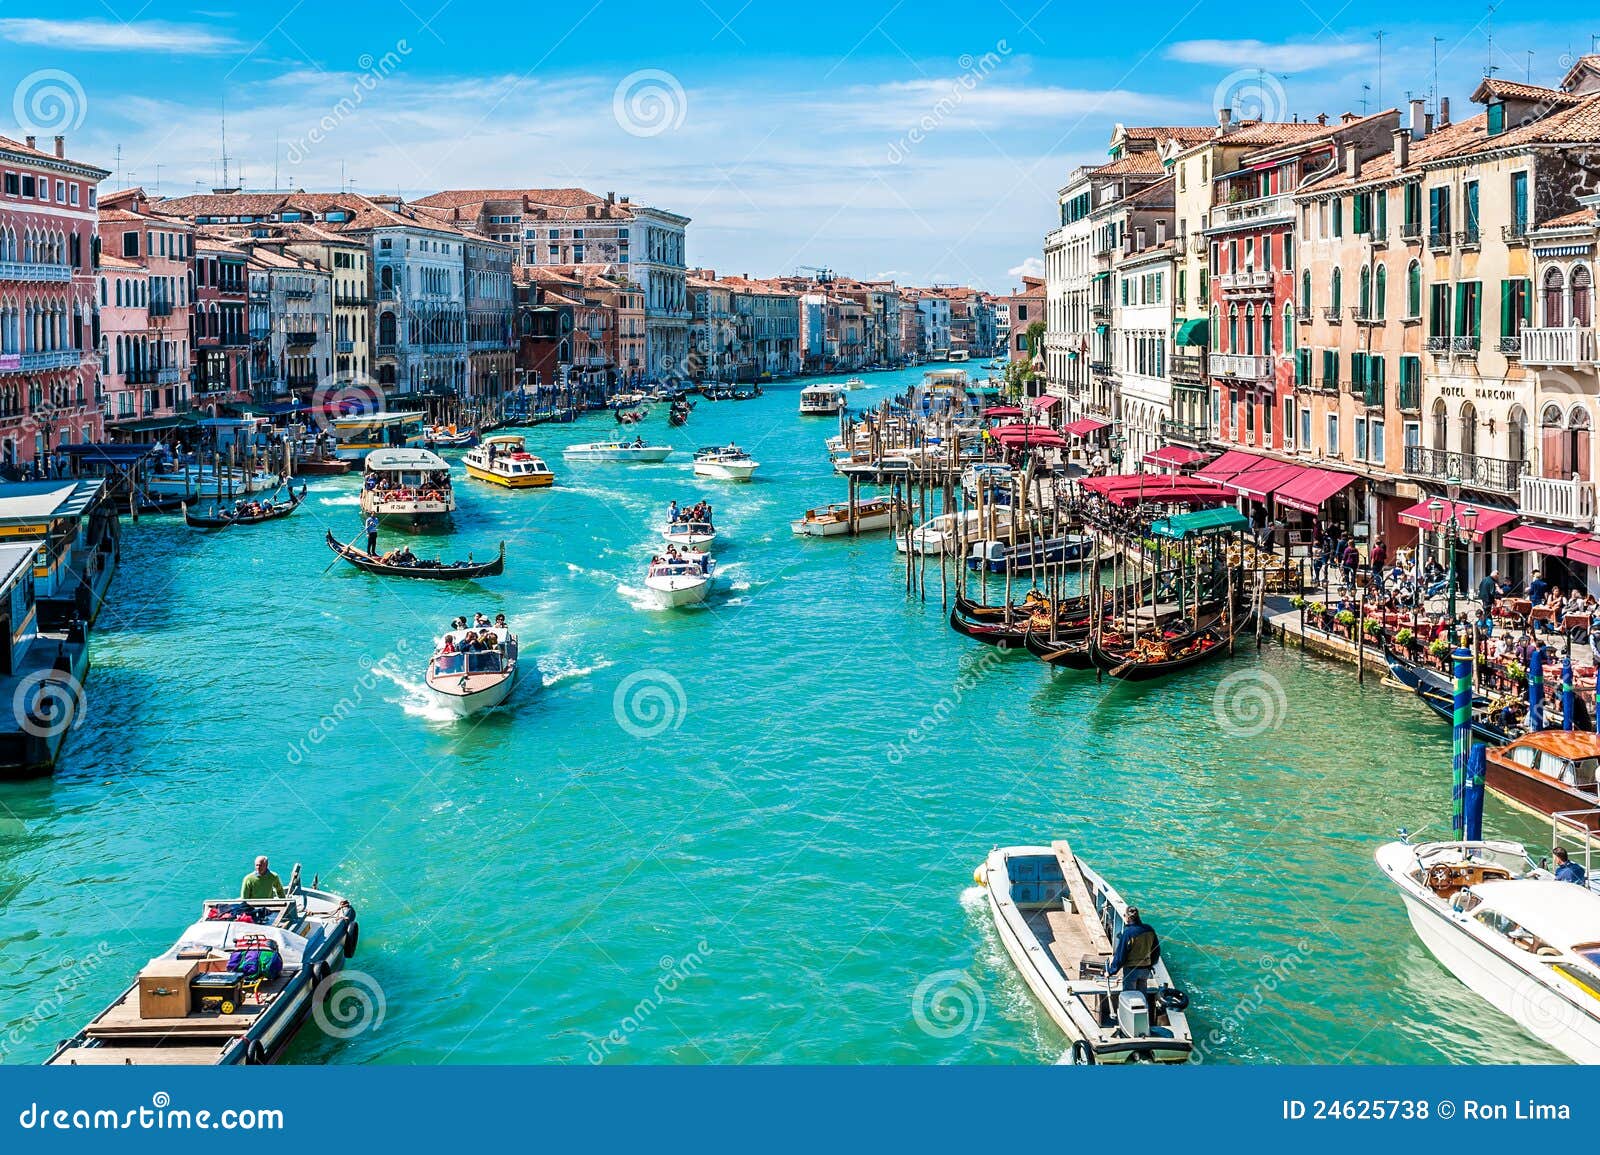 Canal Grande  Venice, Italy Stock Photo  Image of blue, cityscape: 24625738